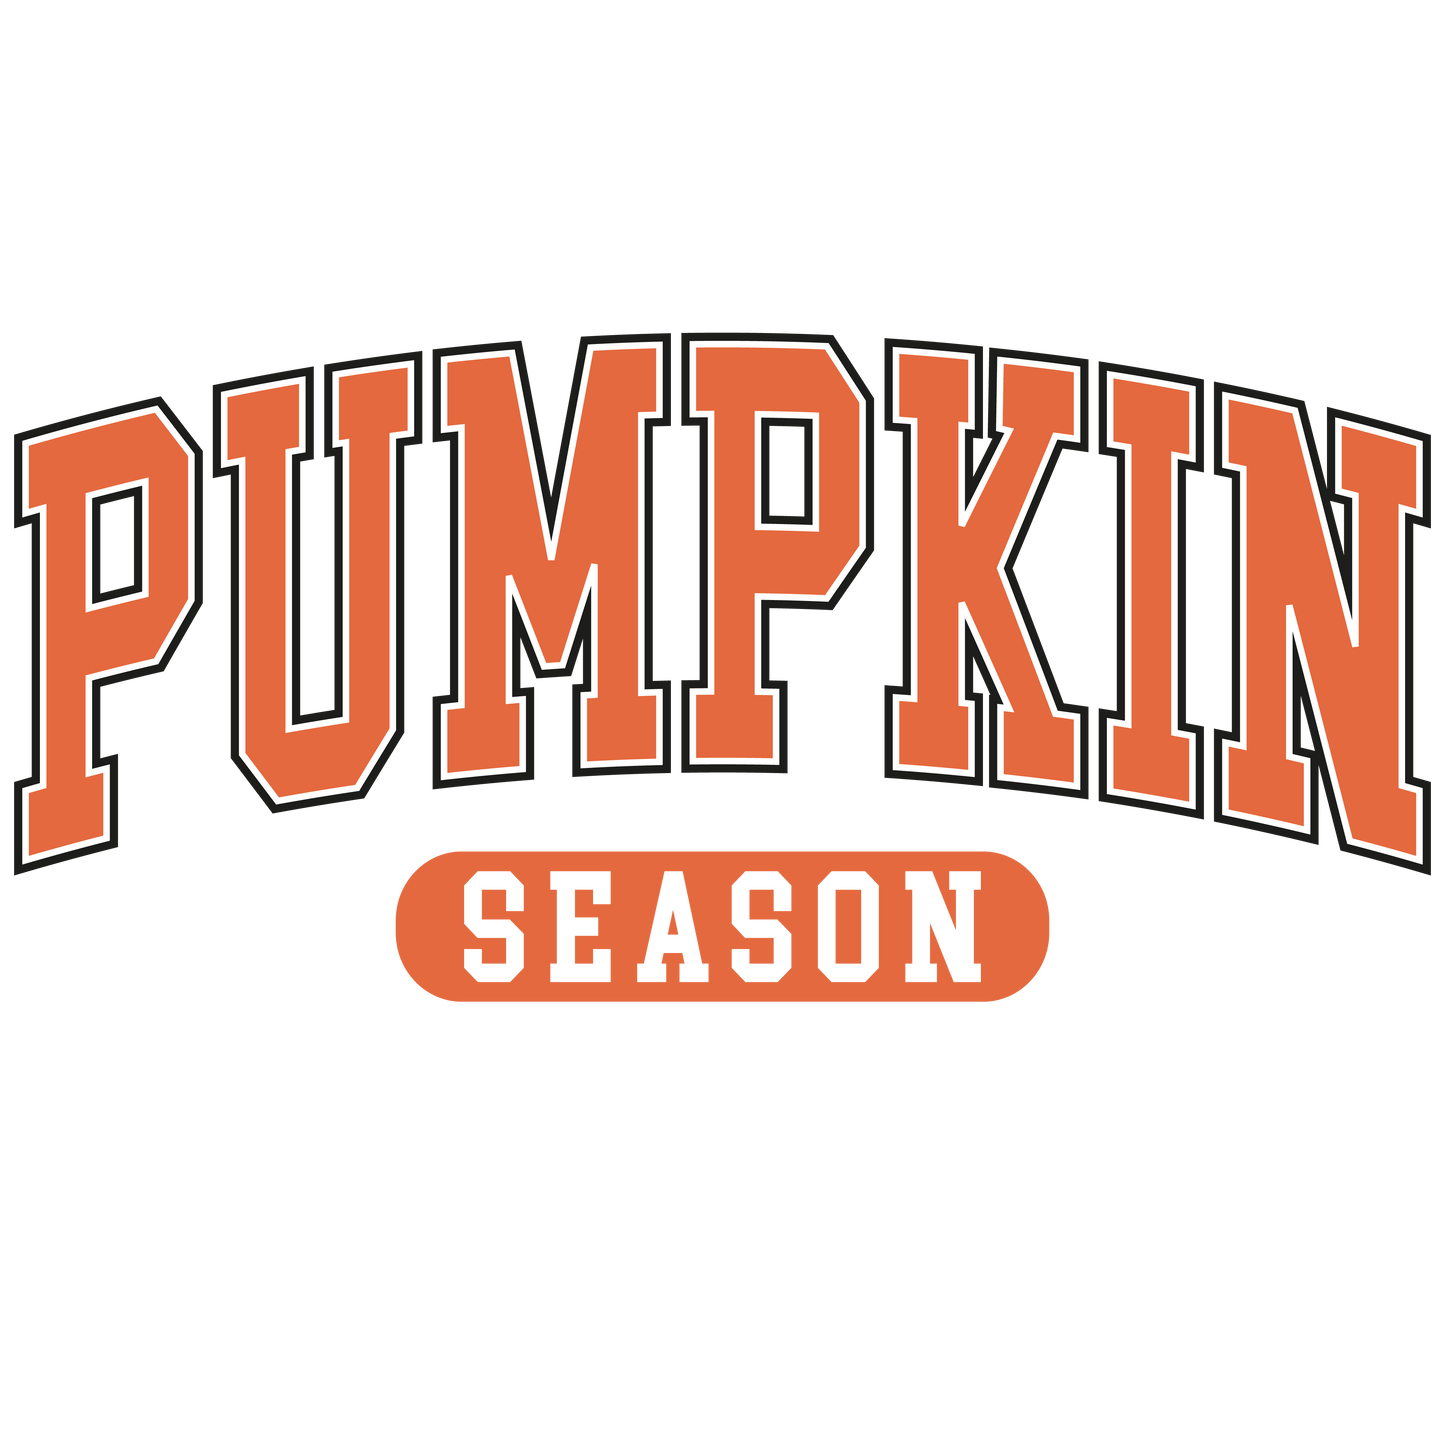 Pumpkin Season Ready To Press DTF Transfer